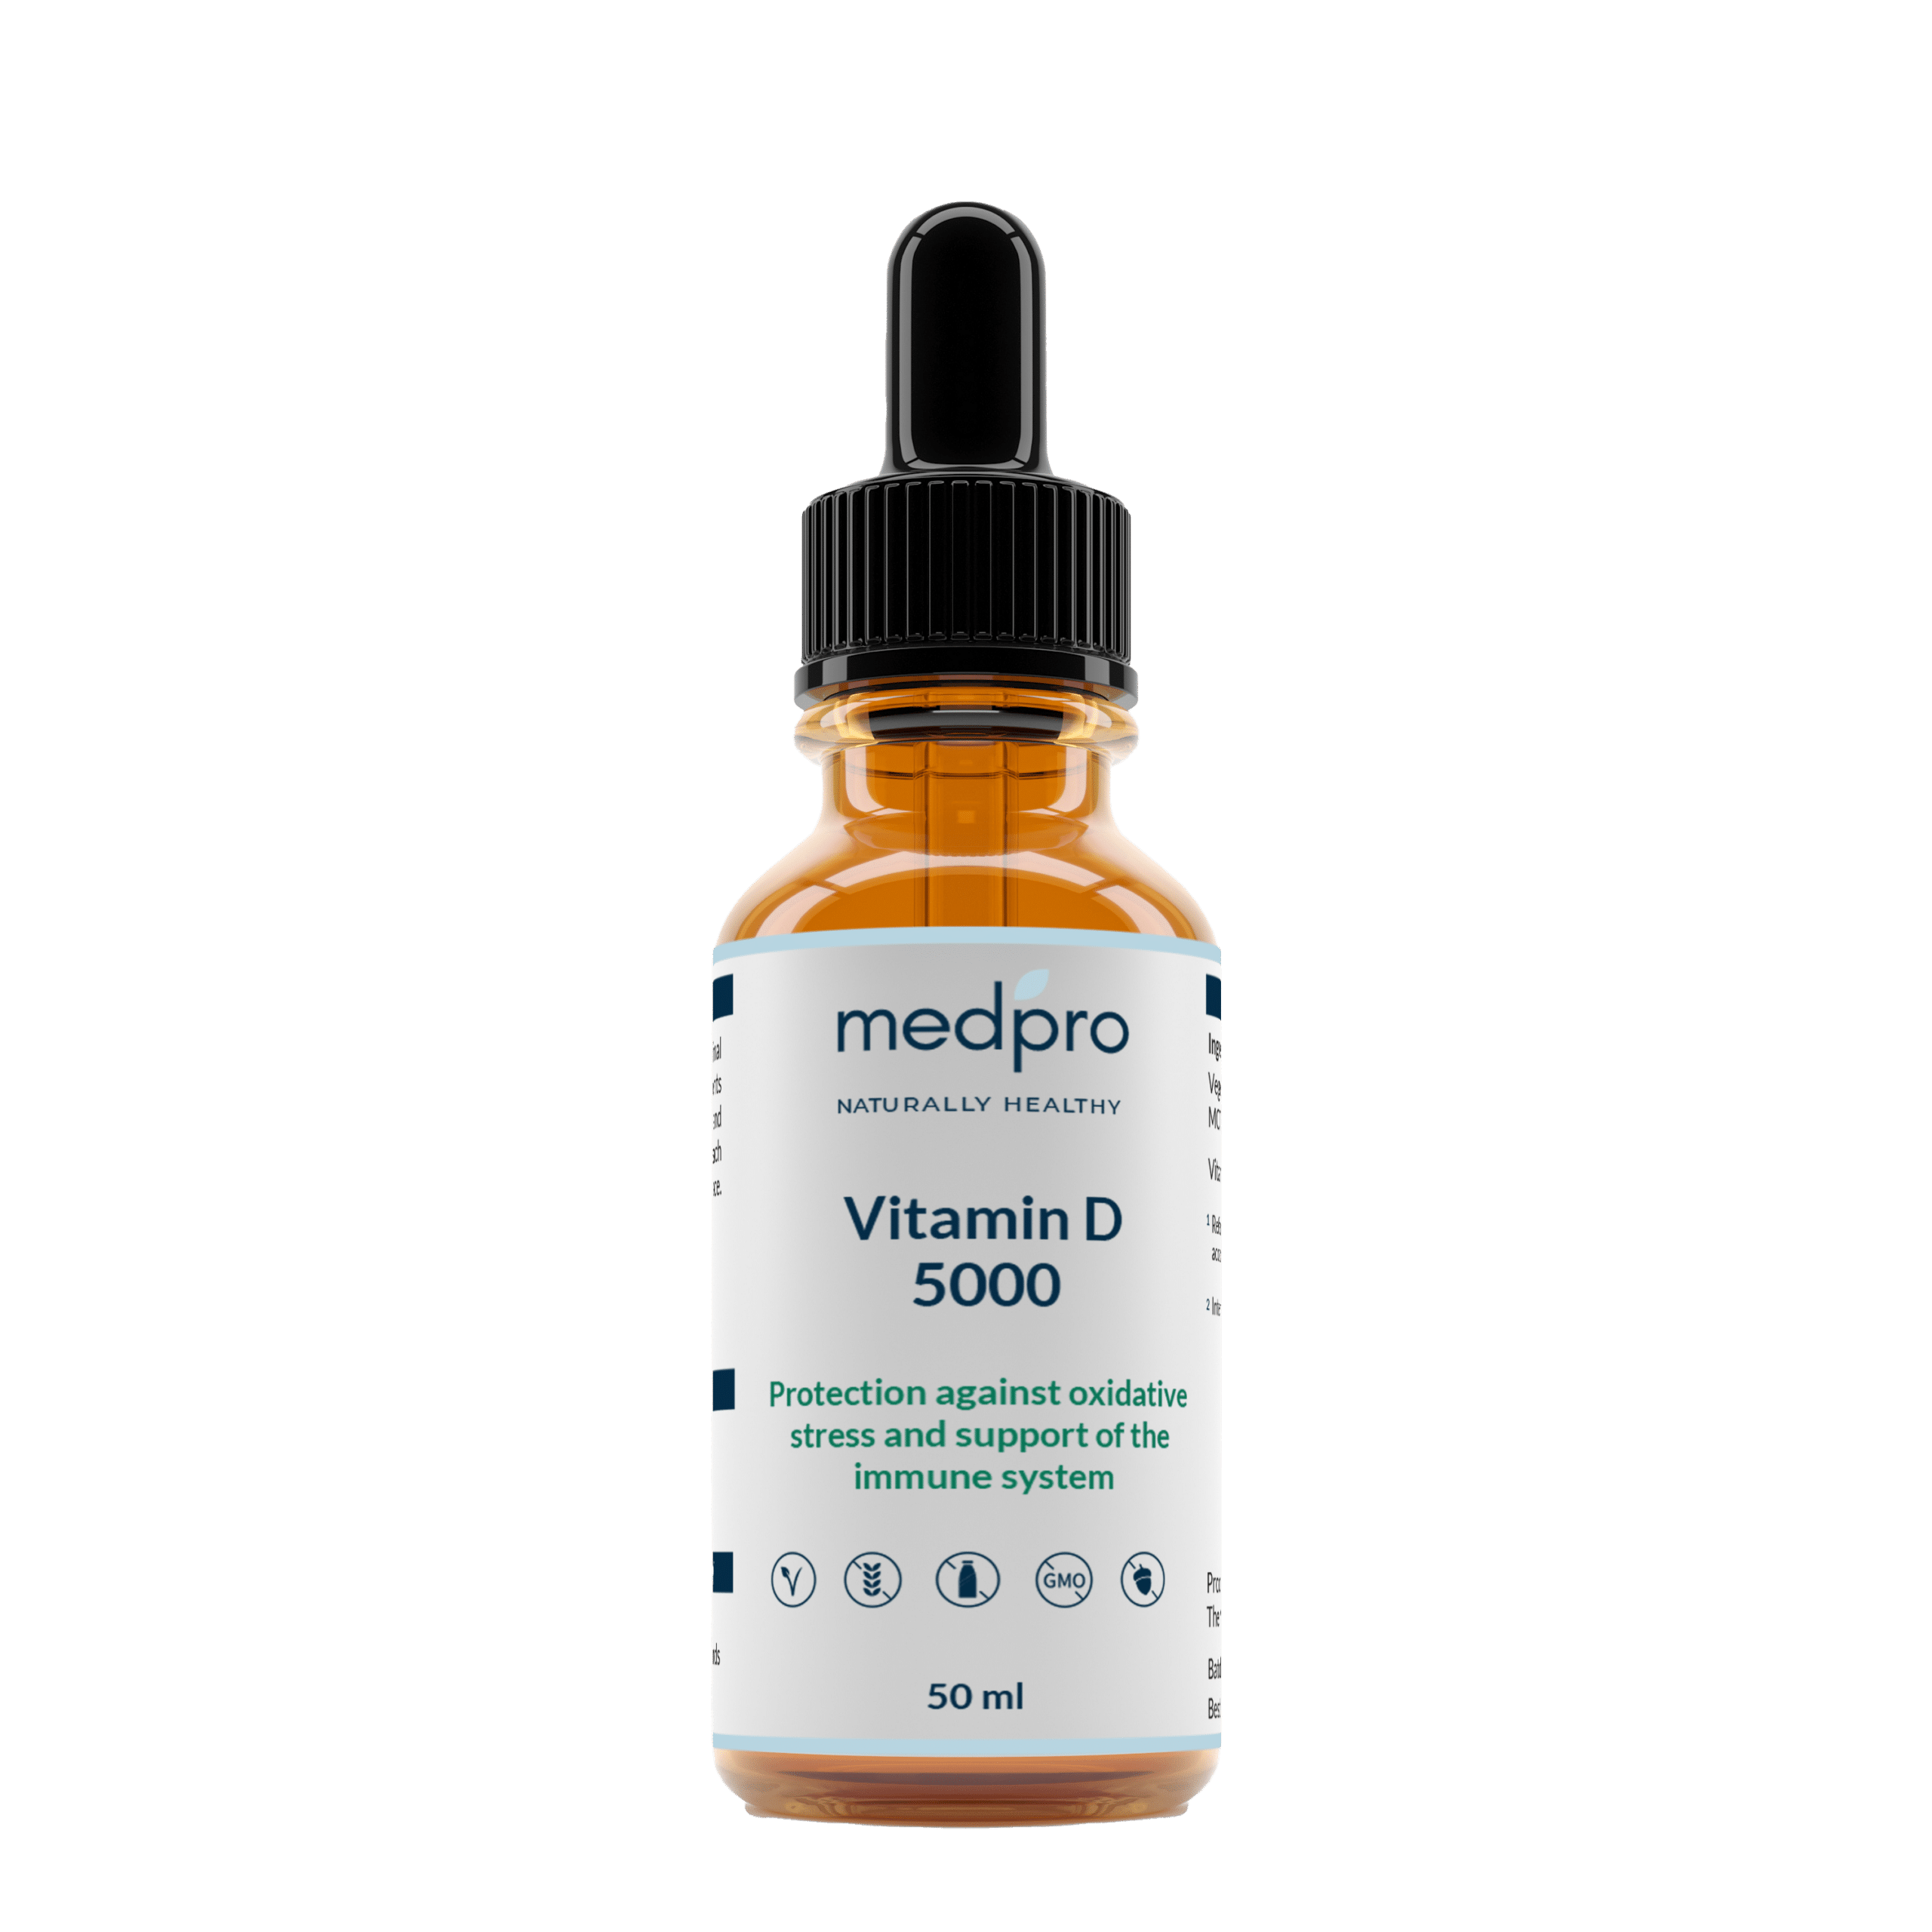 Vitamin D product bottle